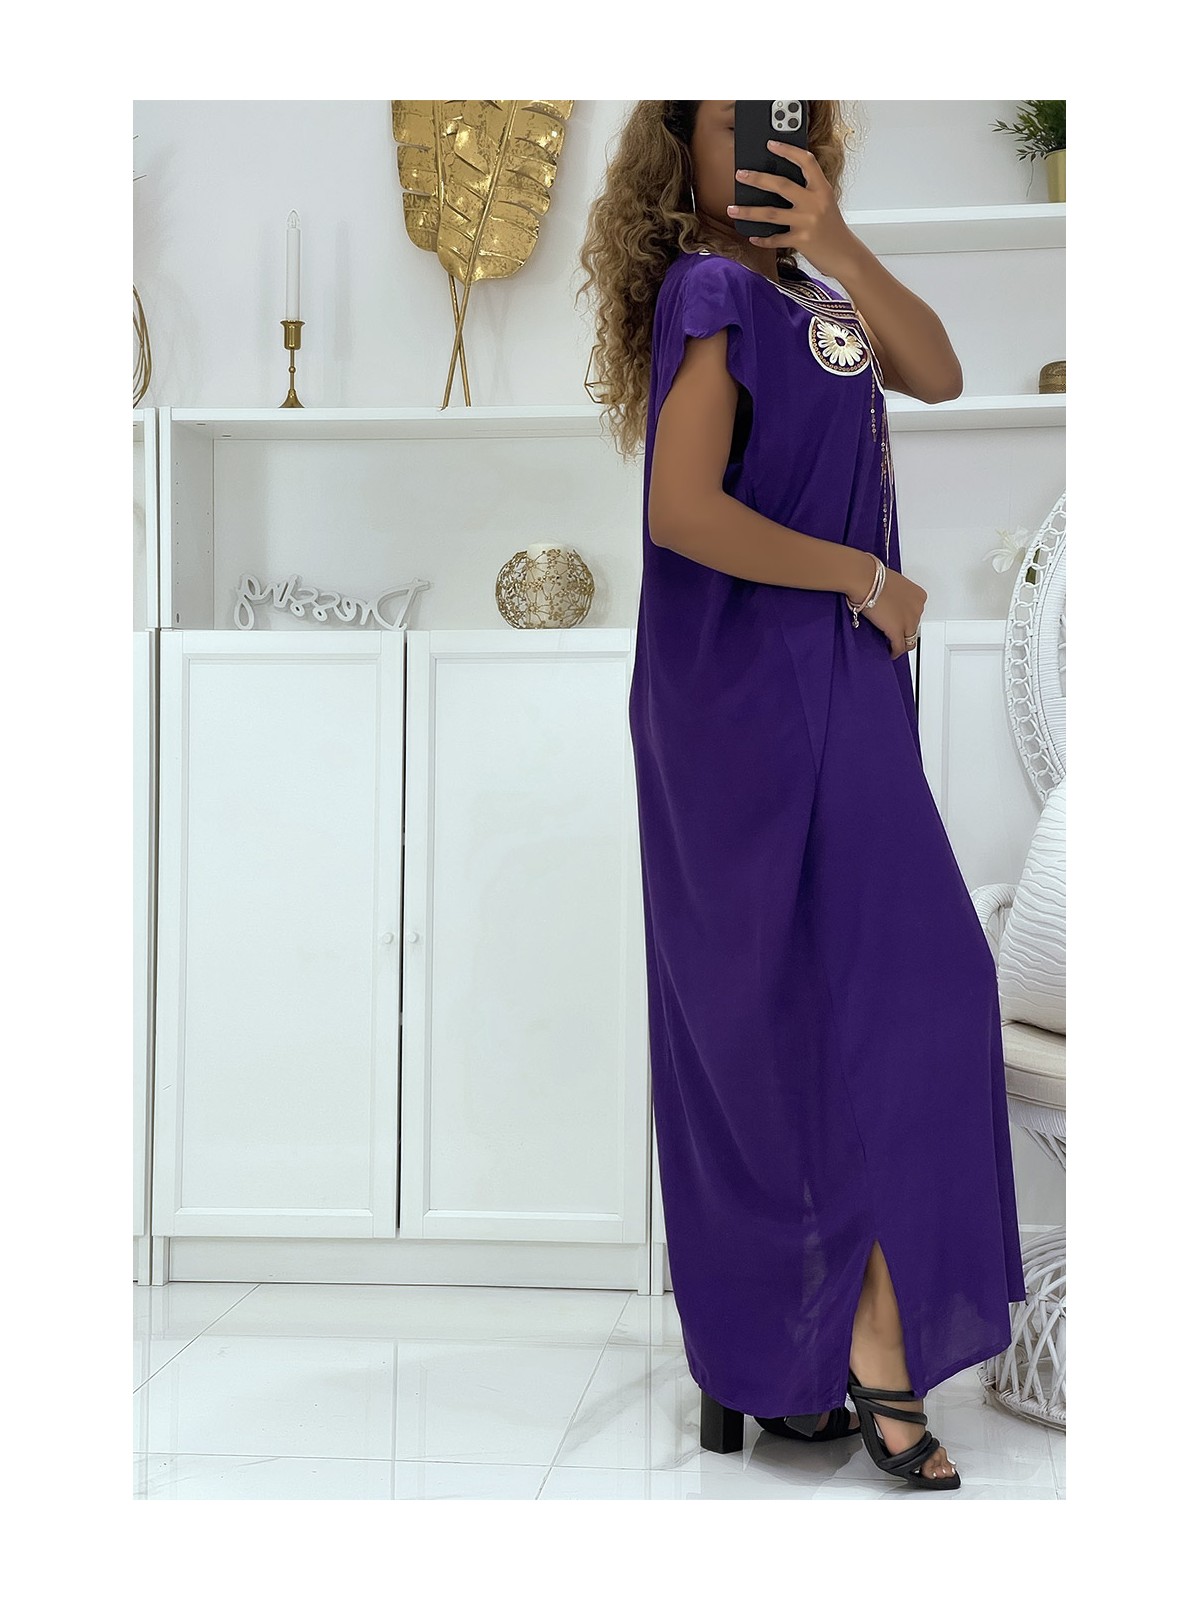 Robe djellaba violet très agréable à porter avec joli motif brodé au col ornée de strass - 3